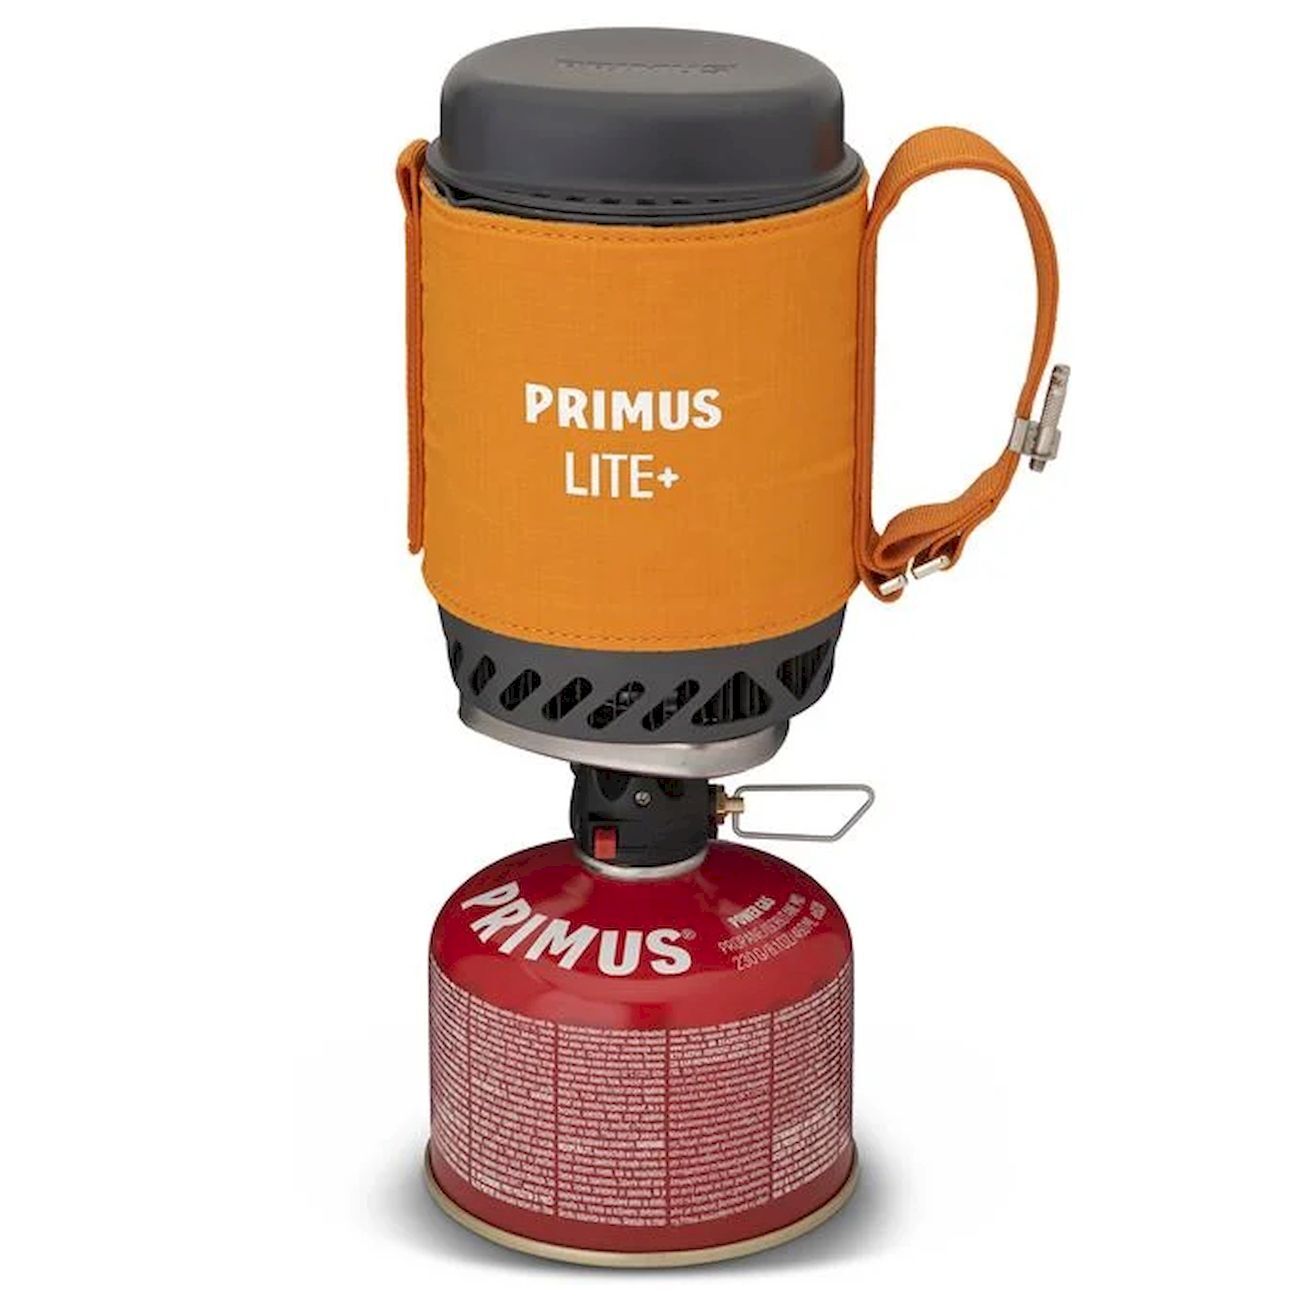 Primus Lite Plus Stove System - Gas stove